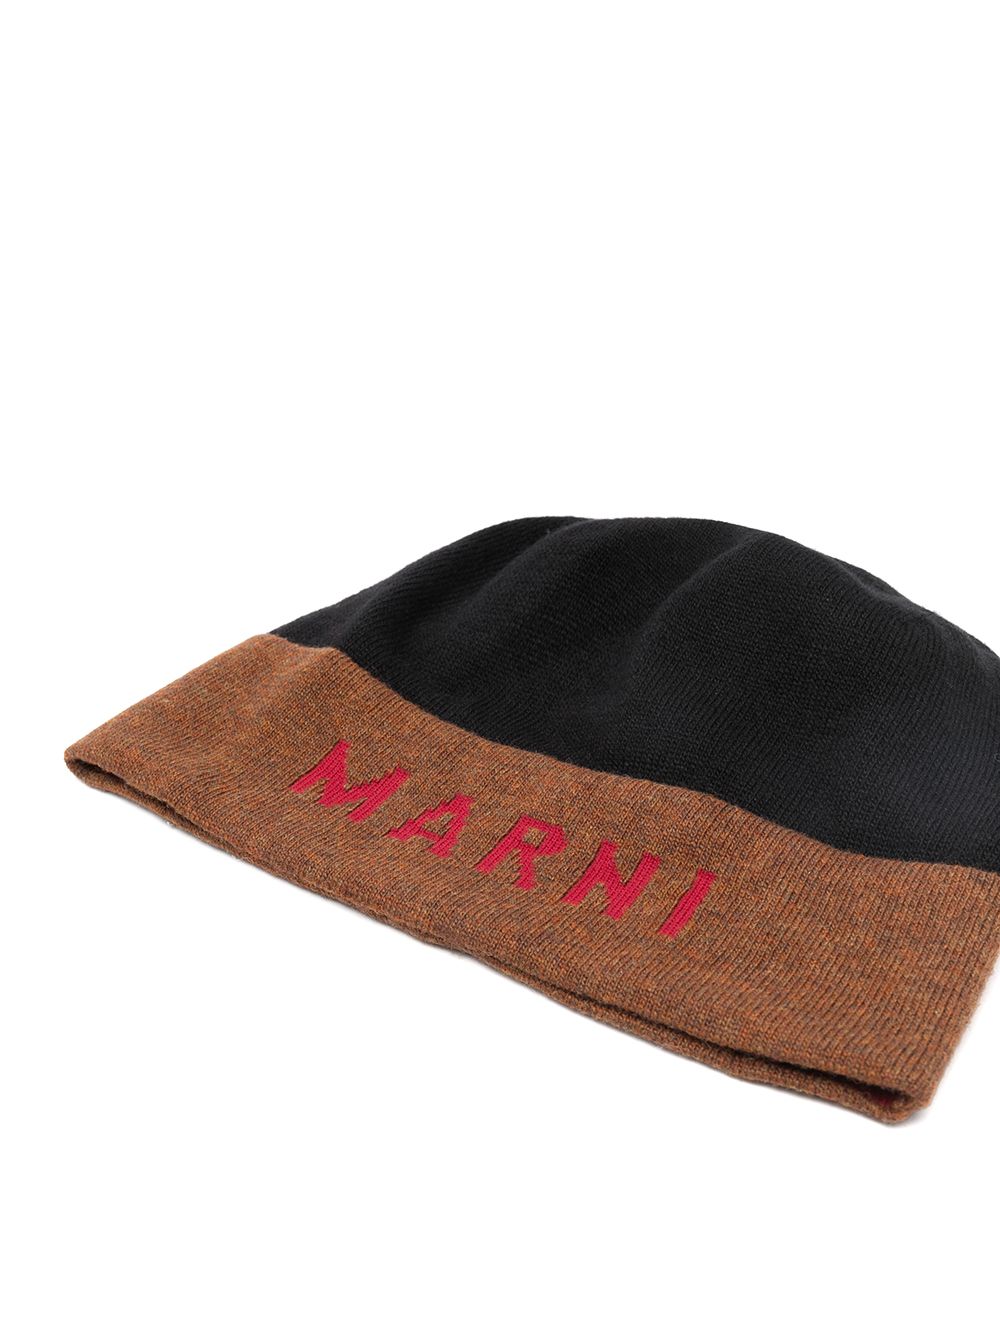 фото Marni шапка бини вязки интарсия с логотипом